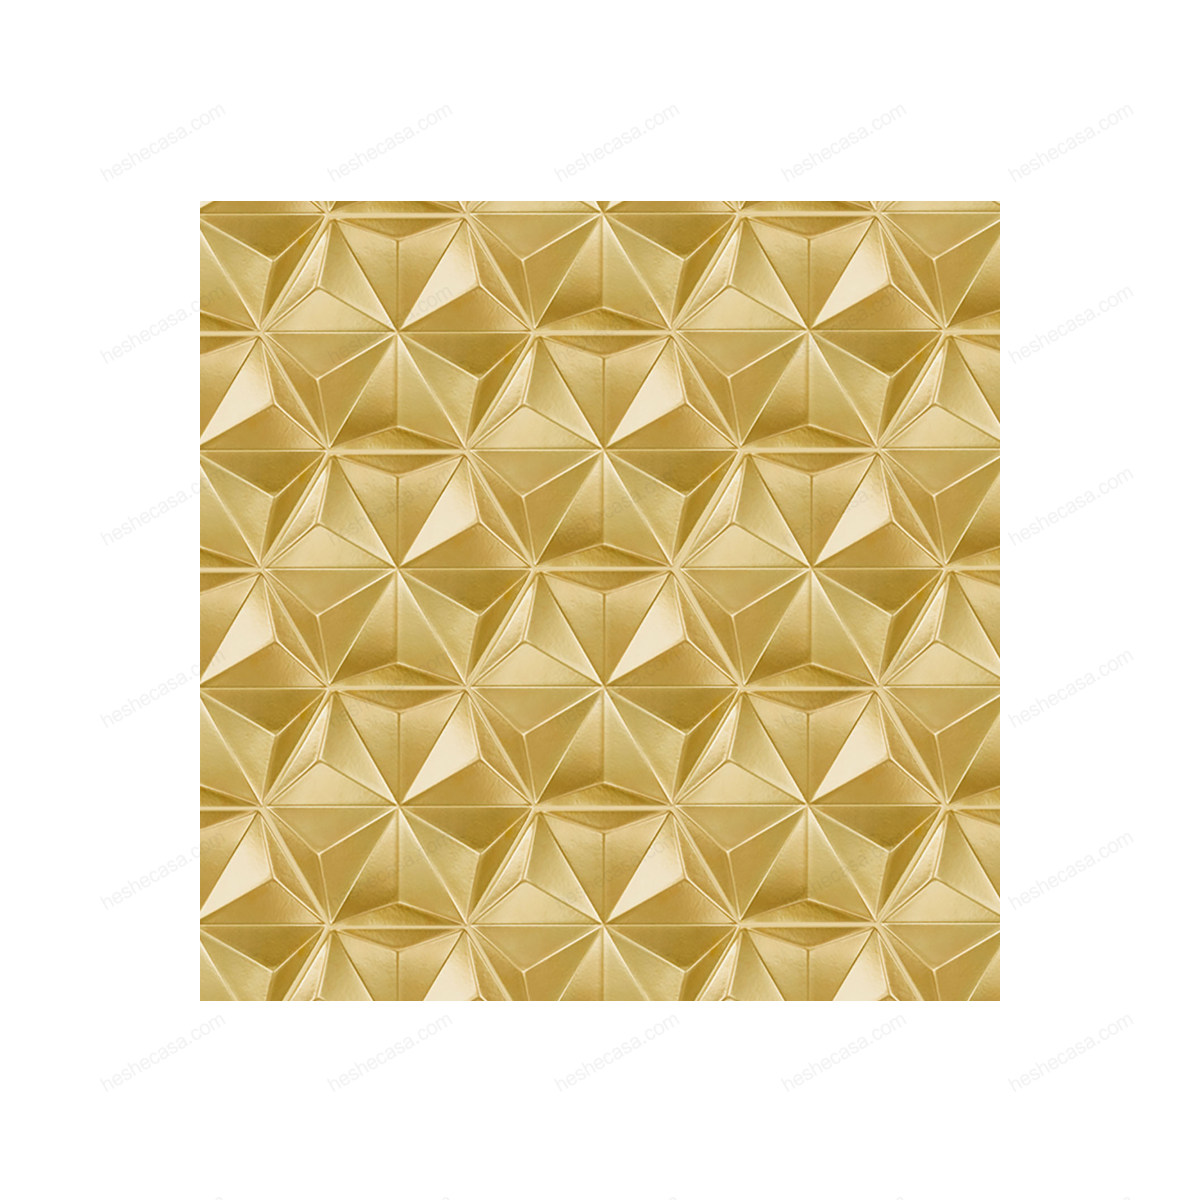 Gold Frozen Crystal瓷砖